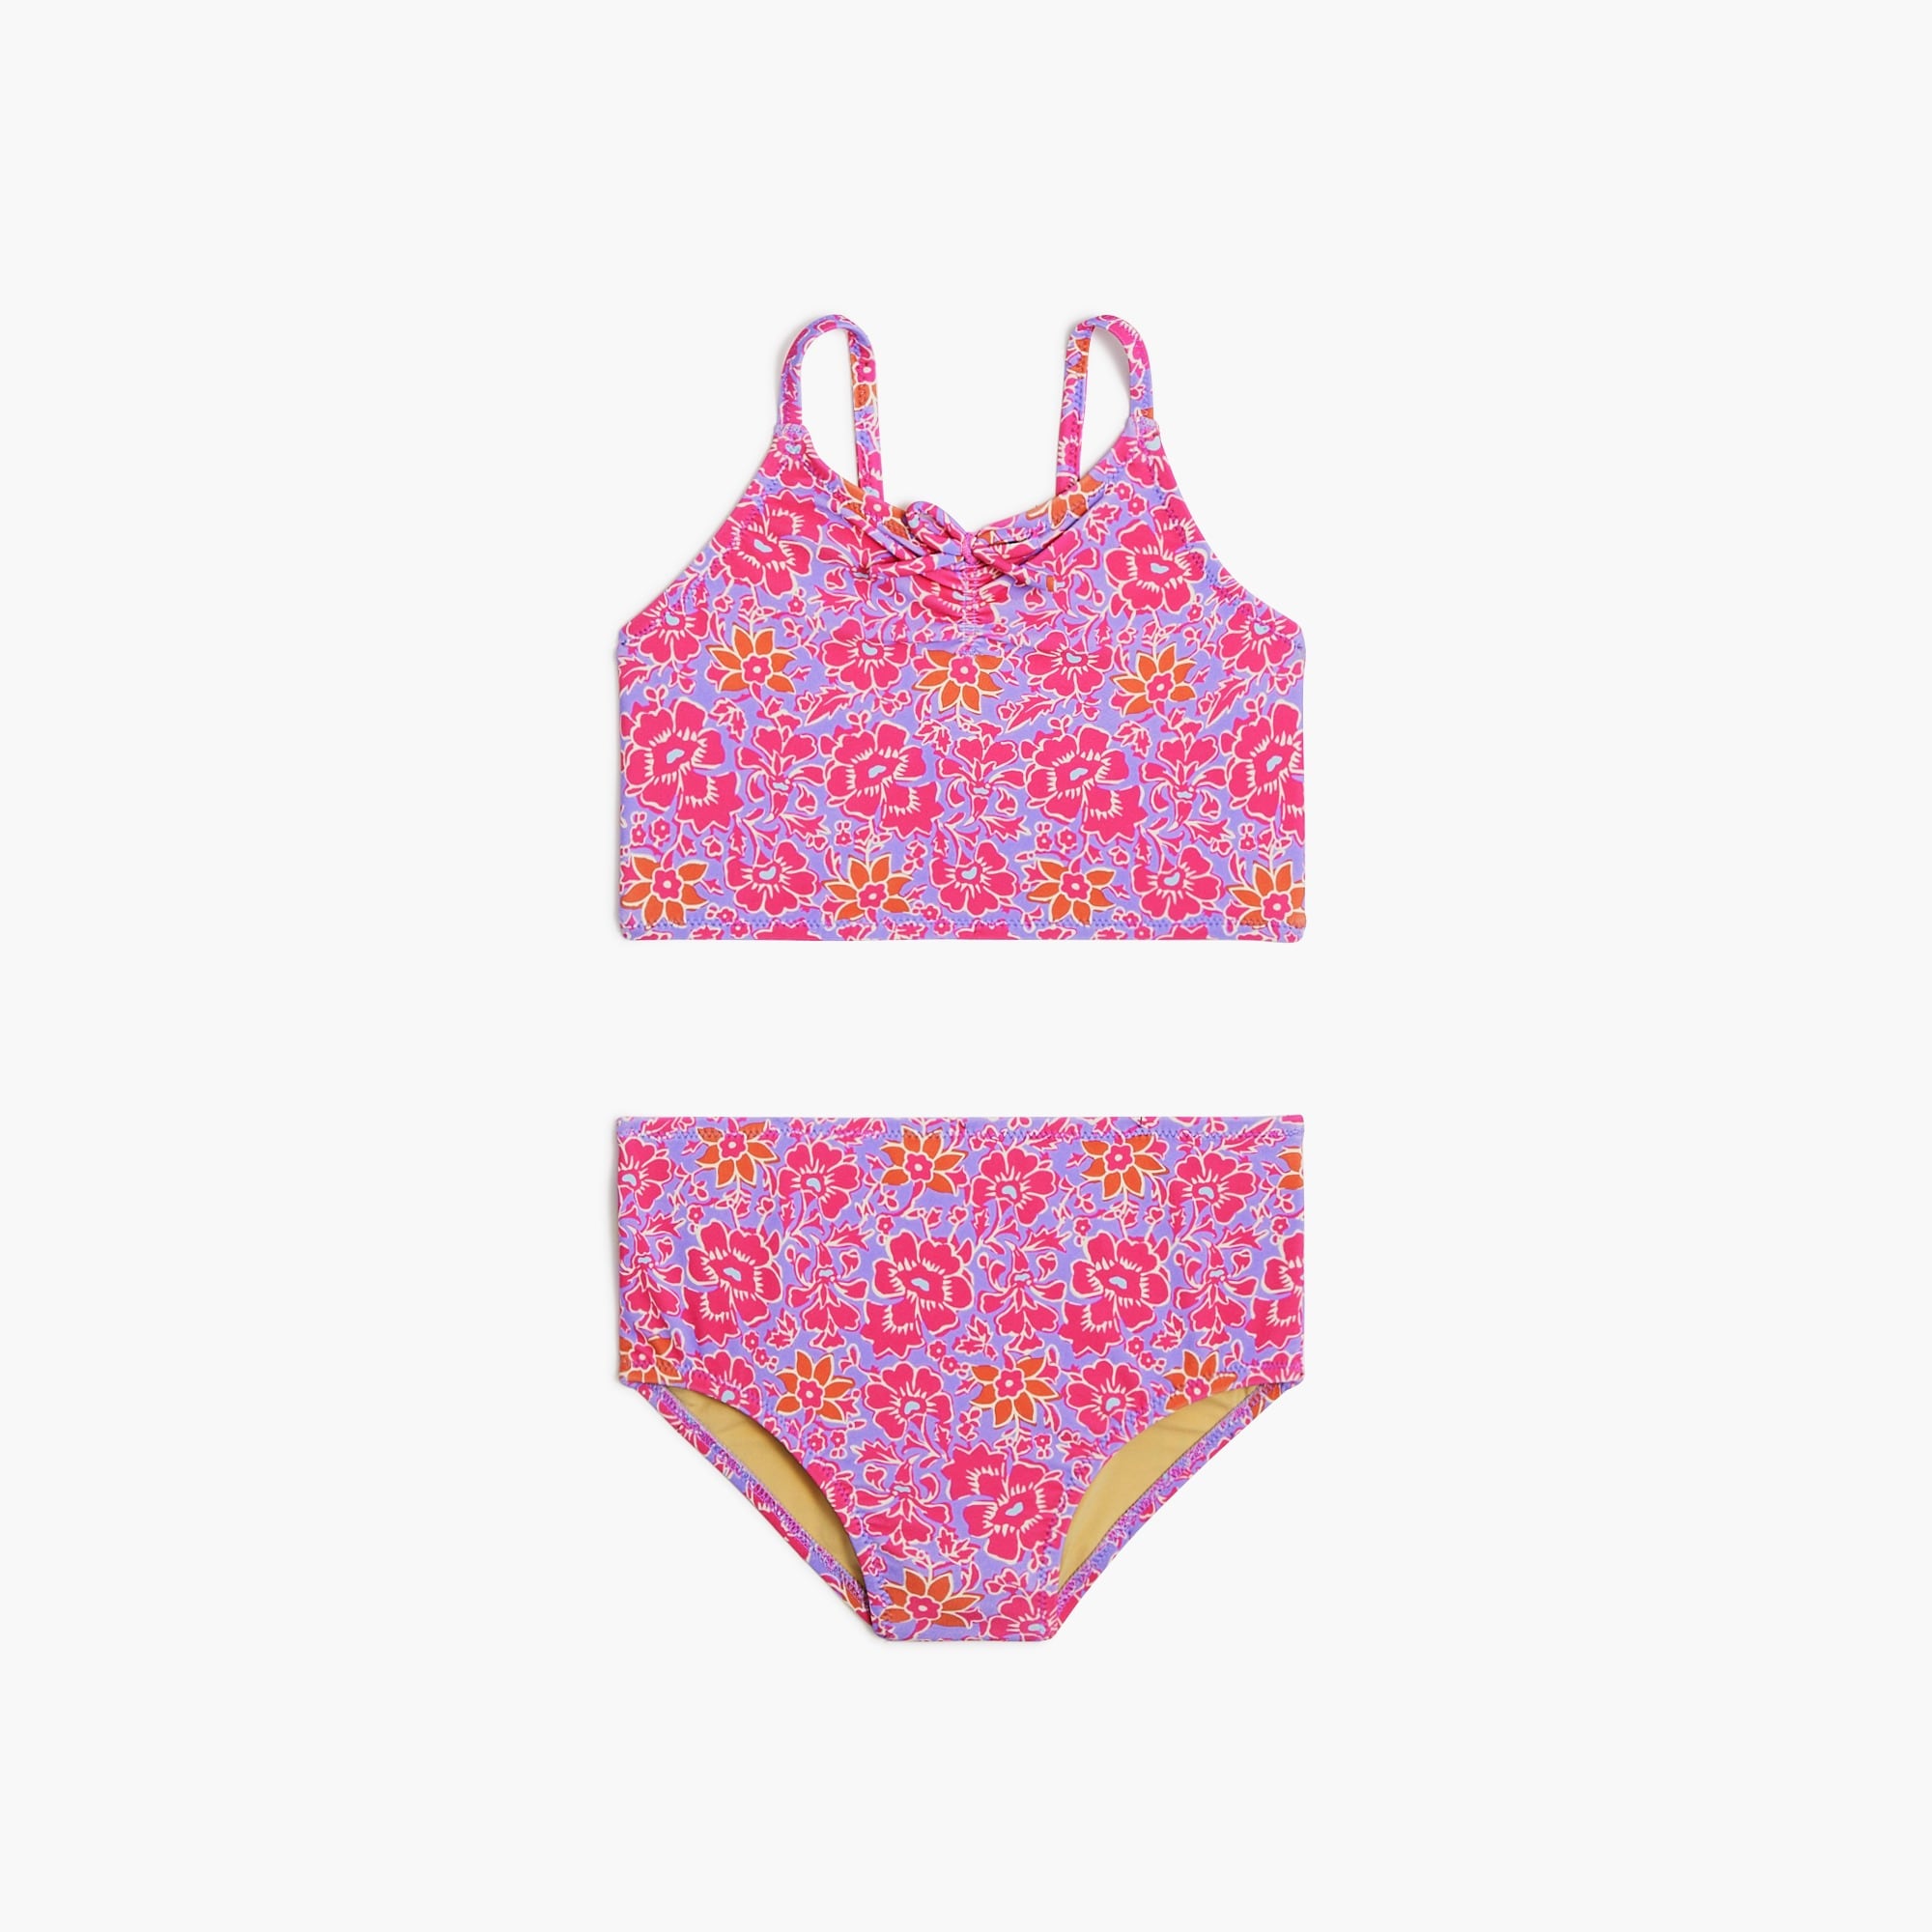  Girls' floral bow bikini set